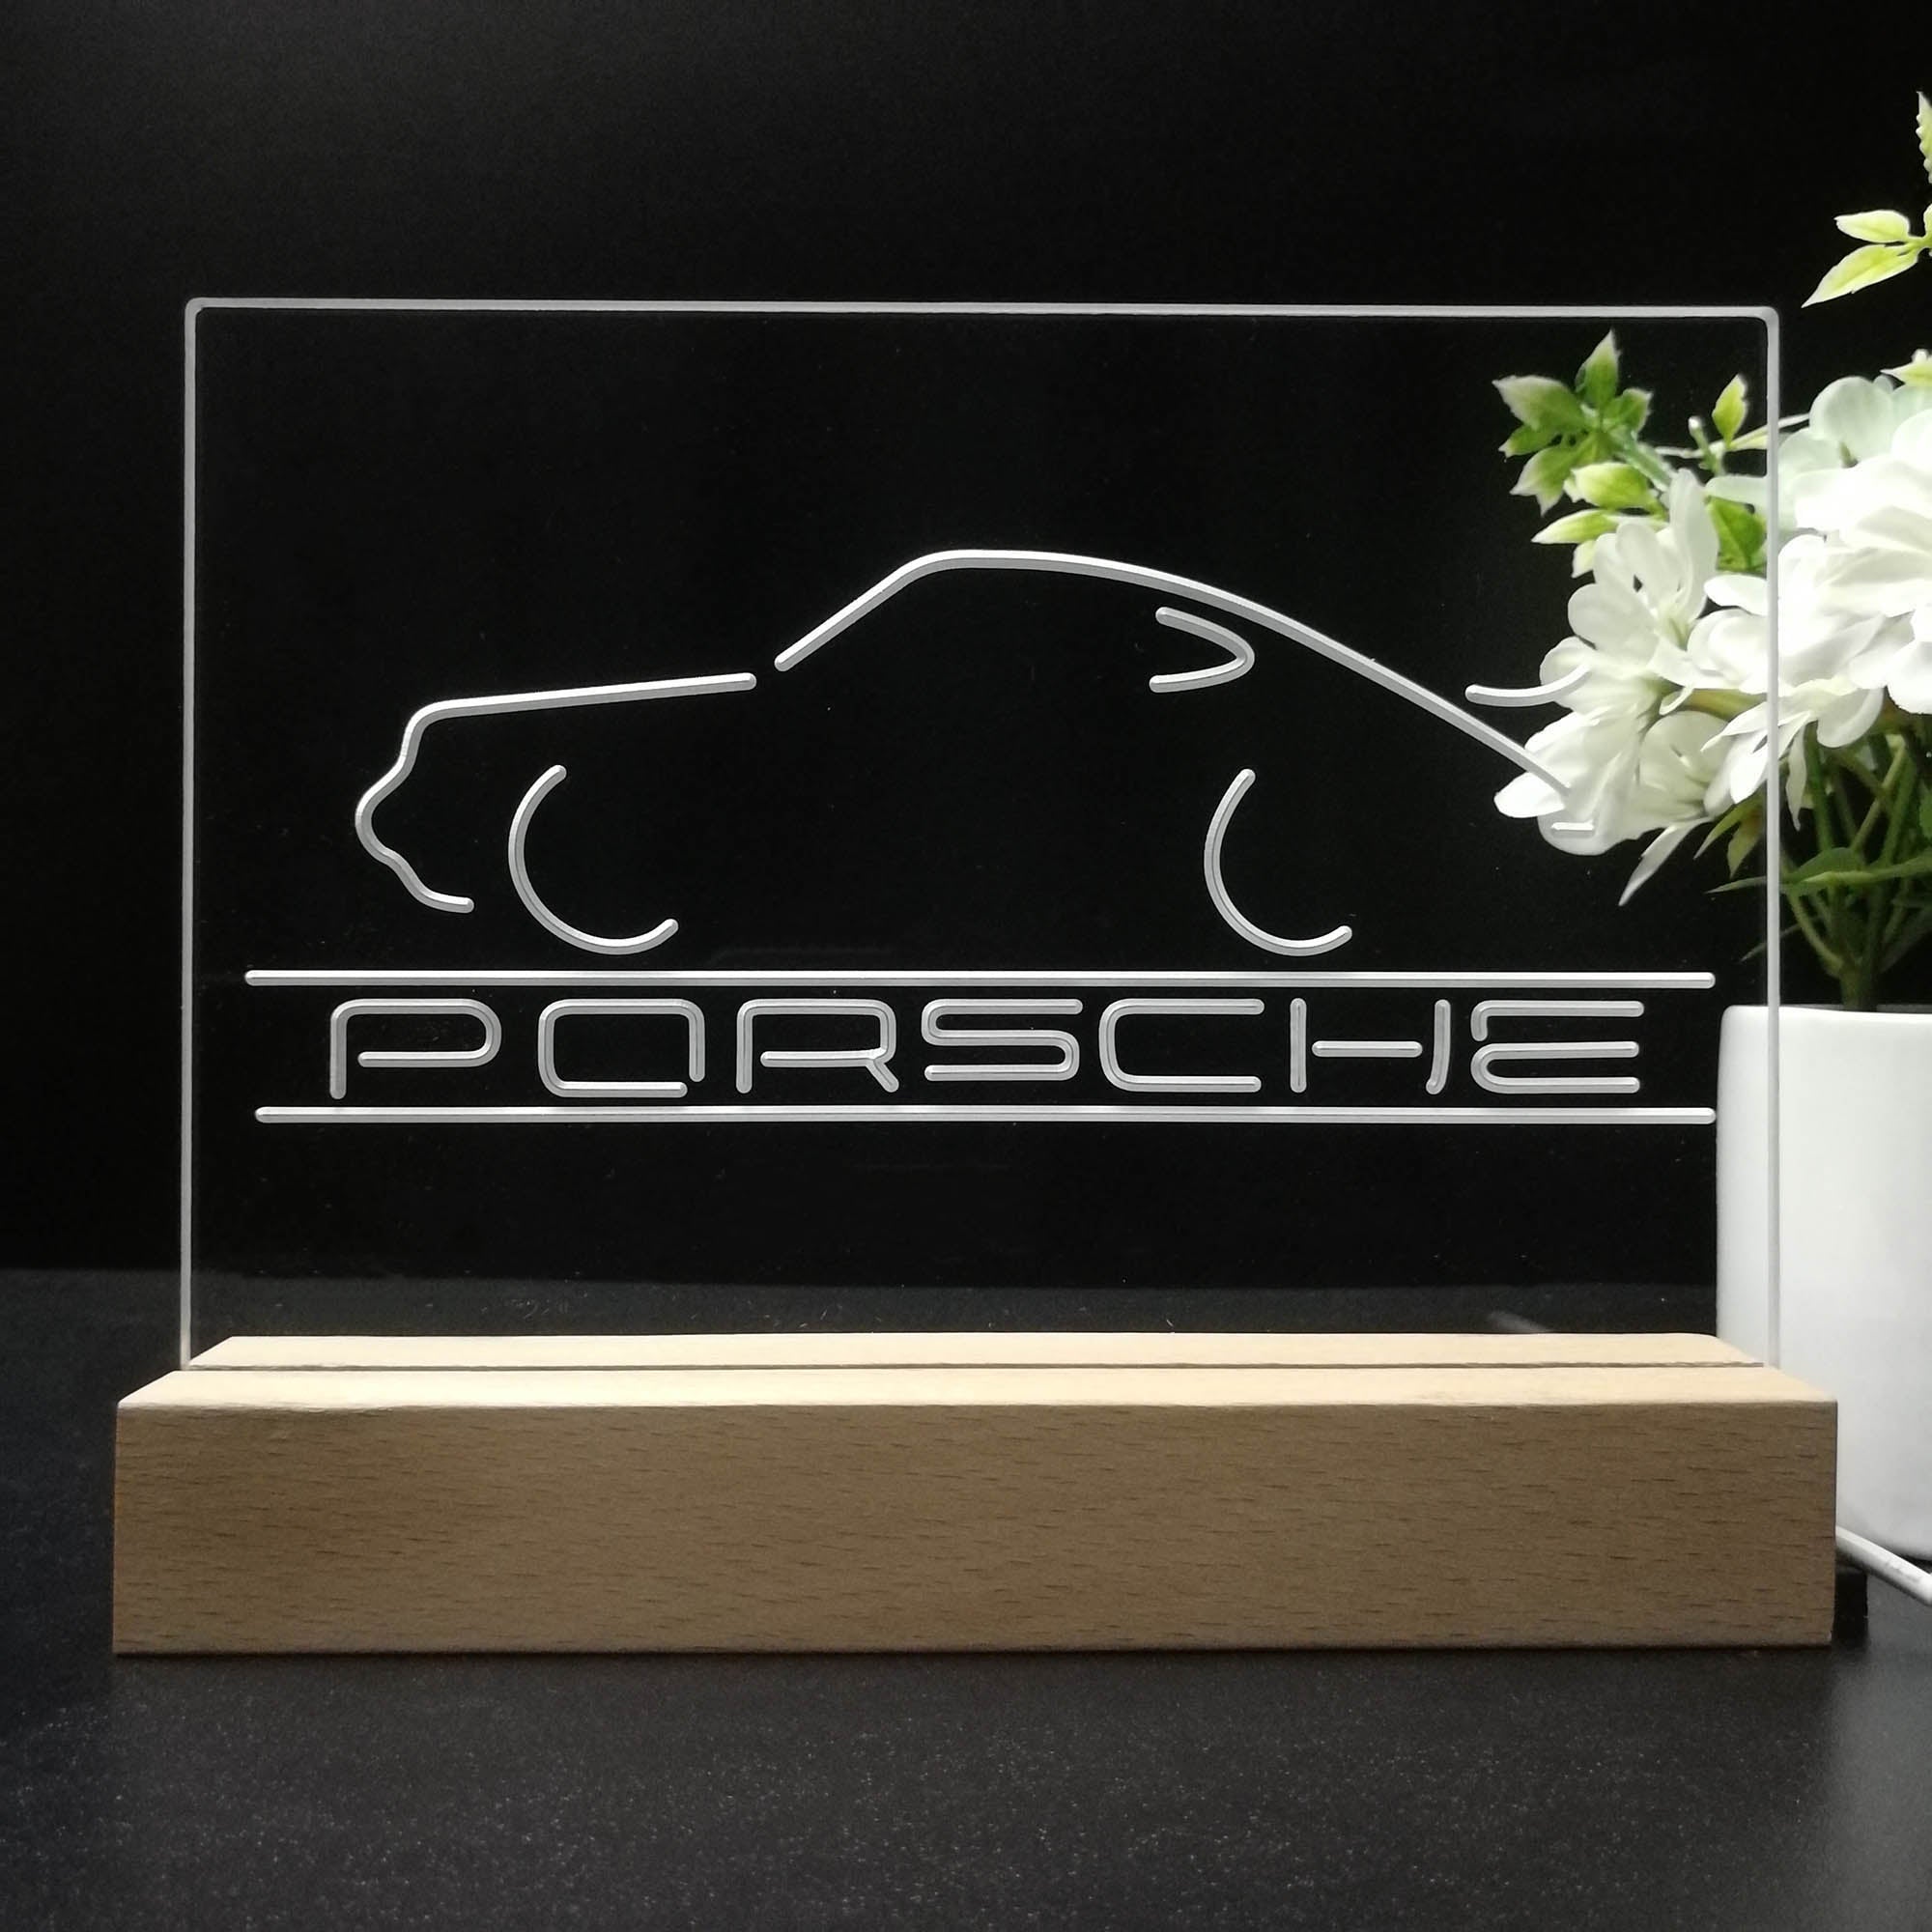 Porsche Garage Gift 3D Illusion Night Light Desk Lamp